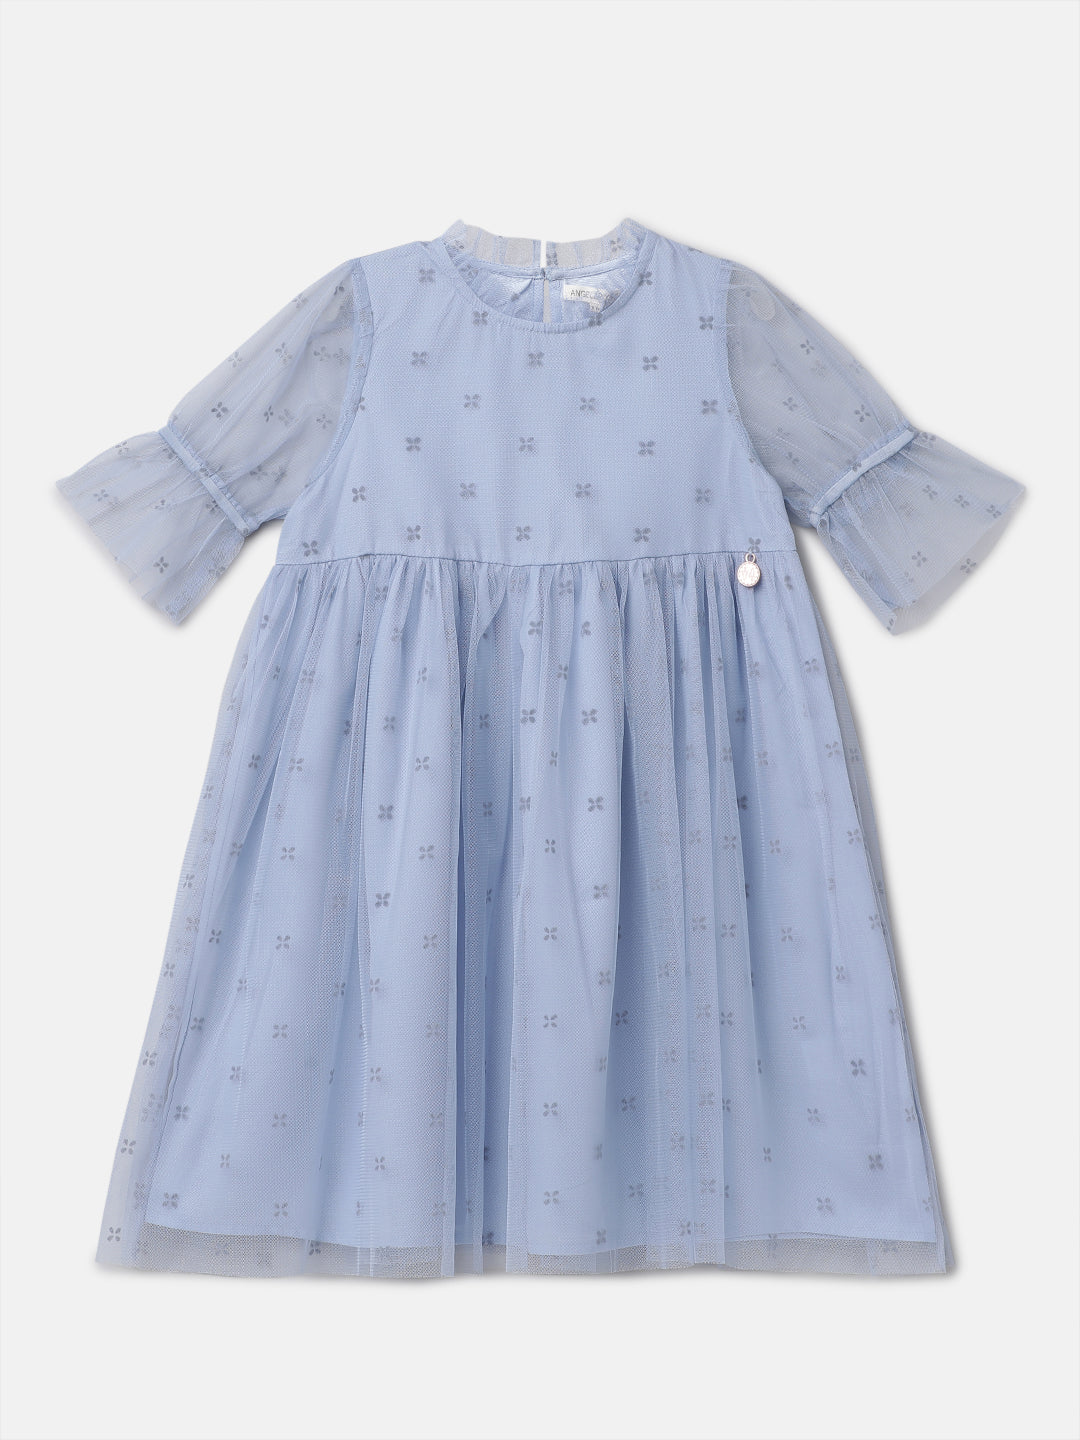 Girls Solid Blue Printed Swing Dress